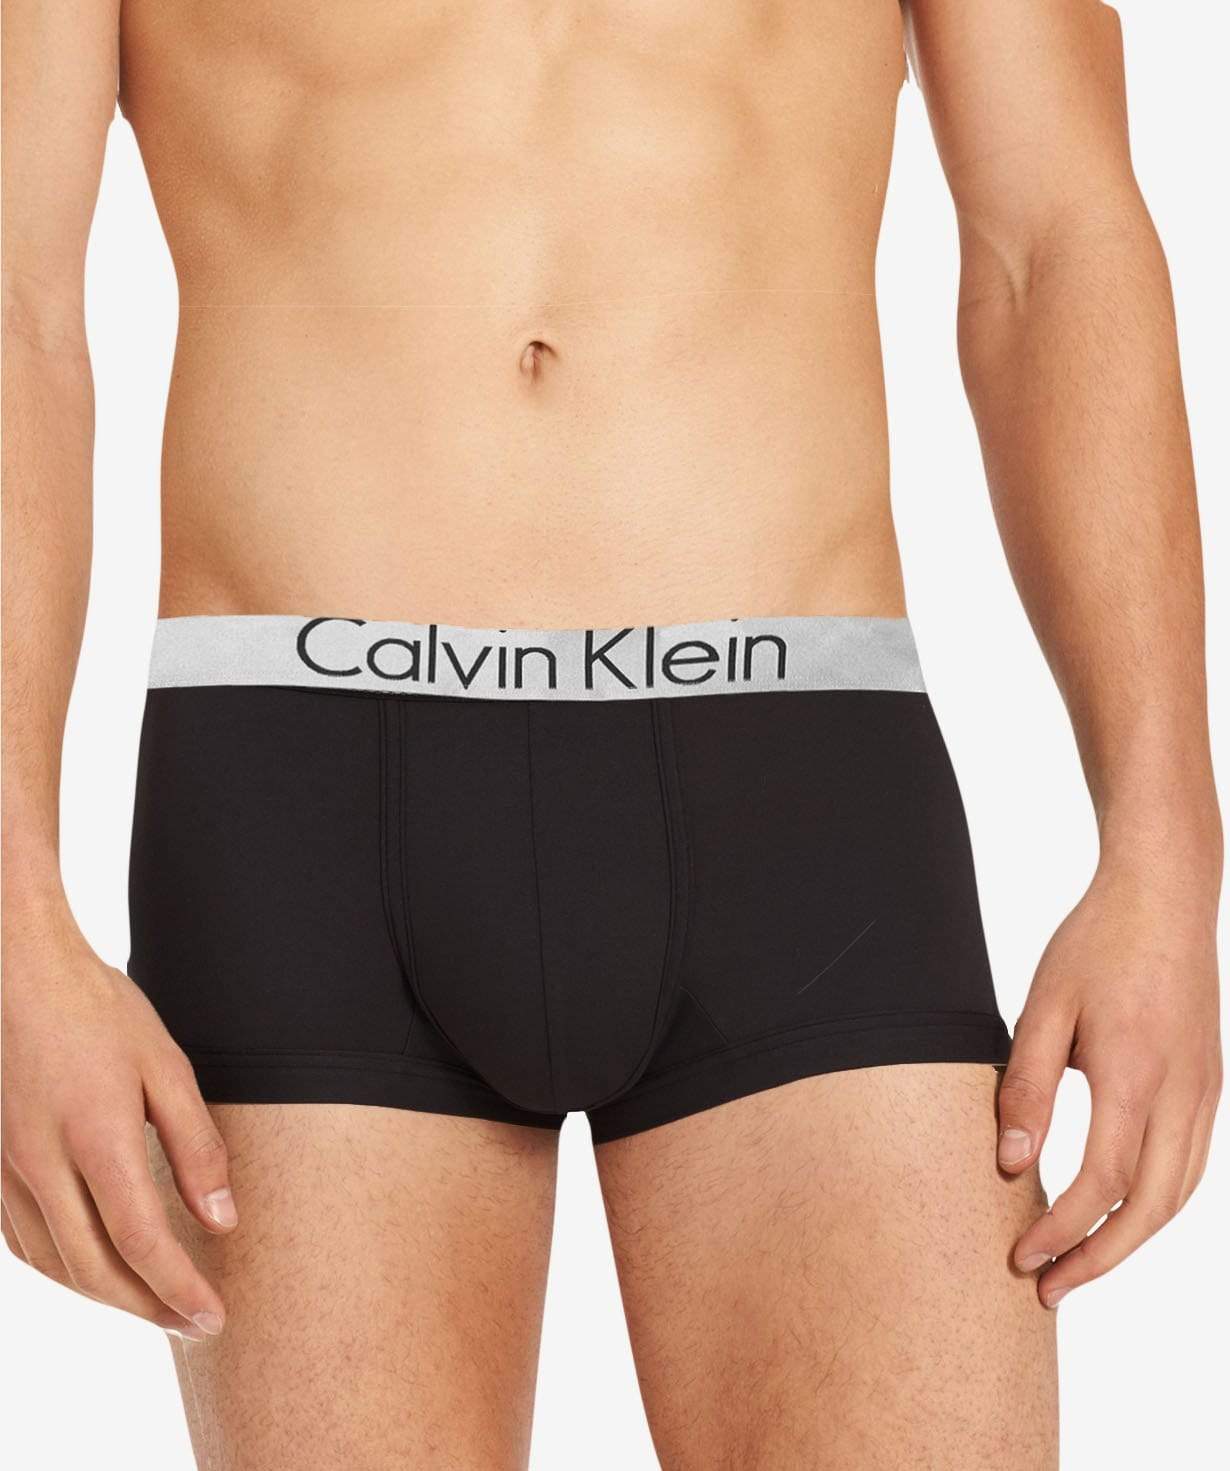 CALVIN KLEIN Mens Underwear S / Black Steel Micro Low Rise Trunk